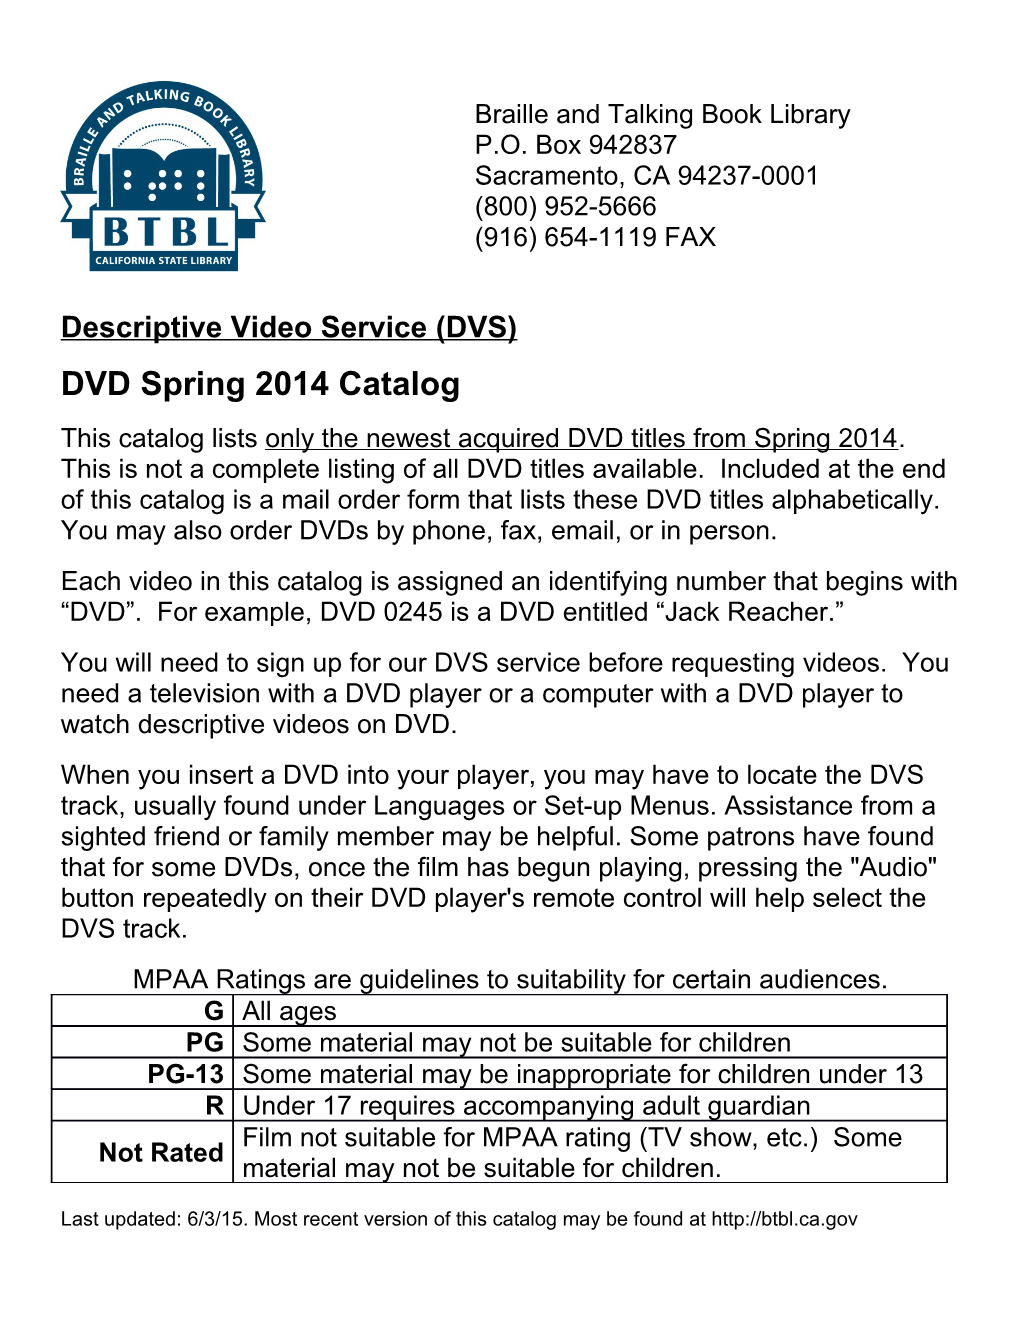 Descriptive Video Service (DVS)